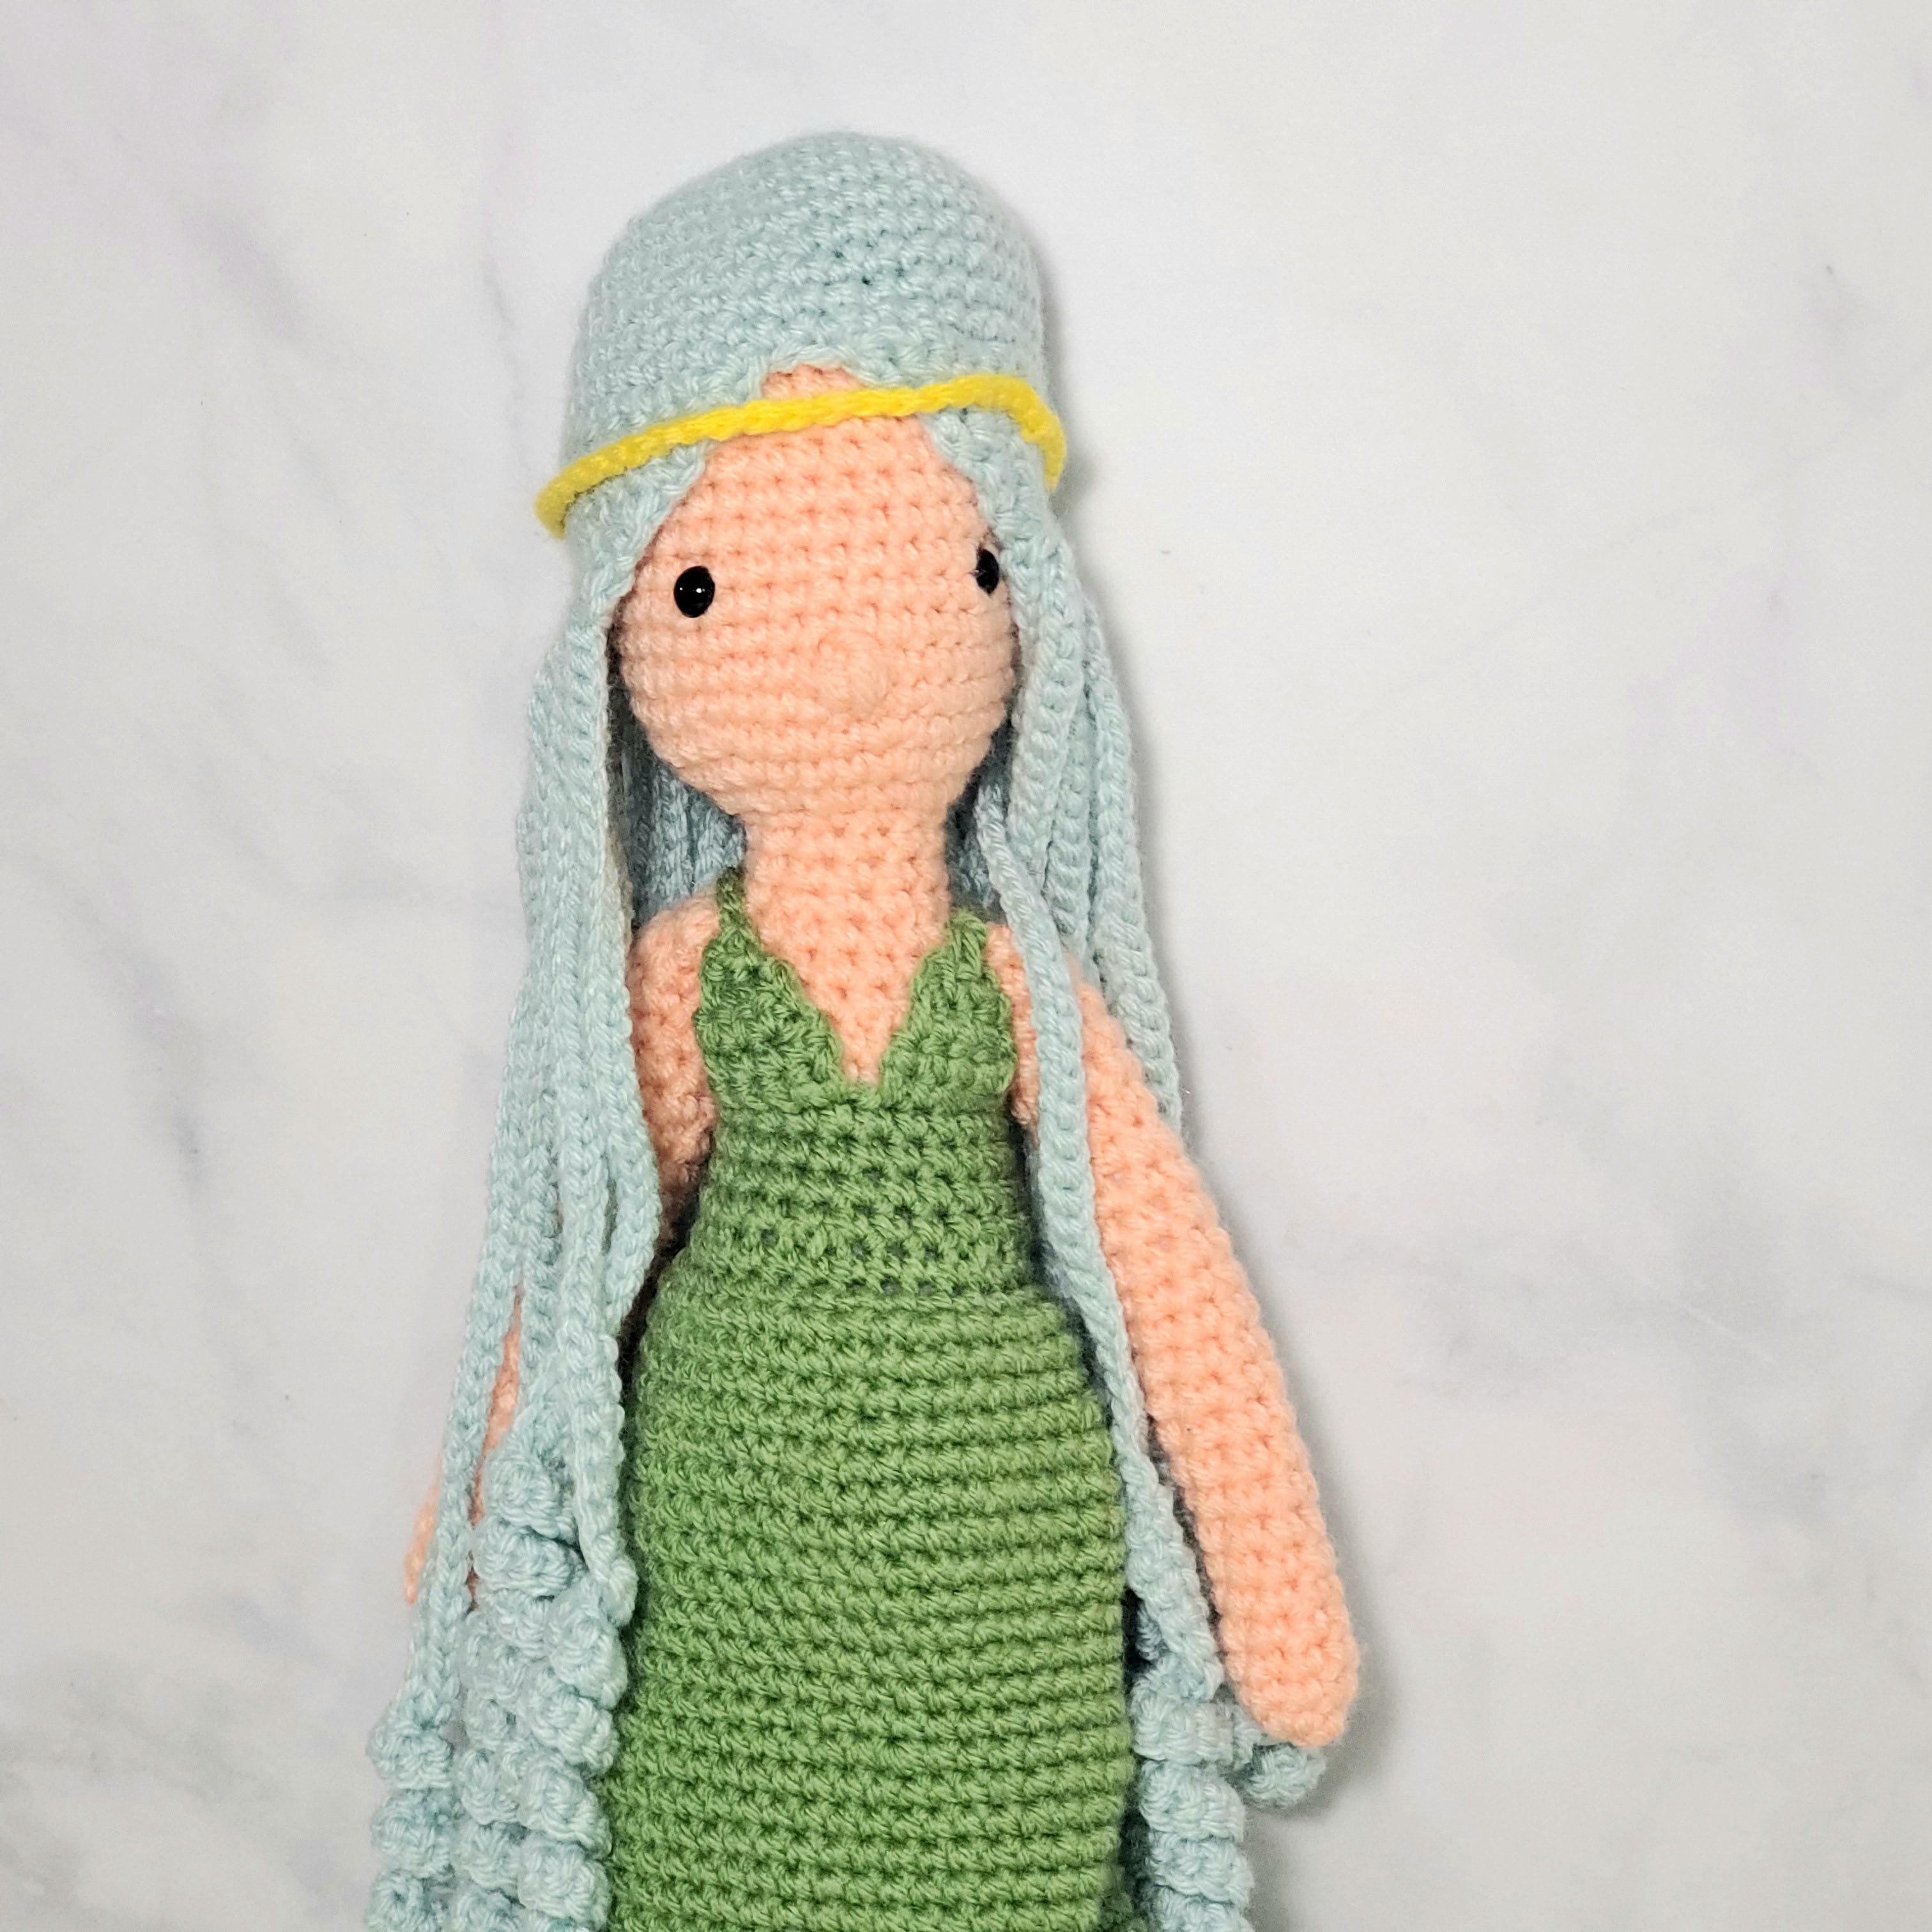 Crochet Plush Toy - Water Nymph